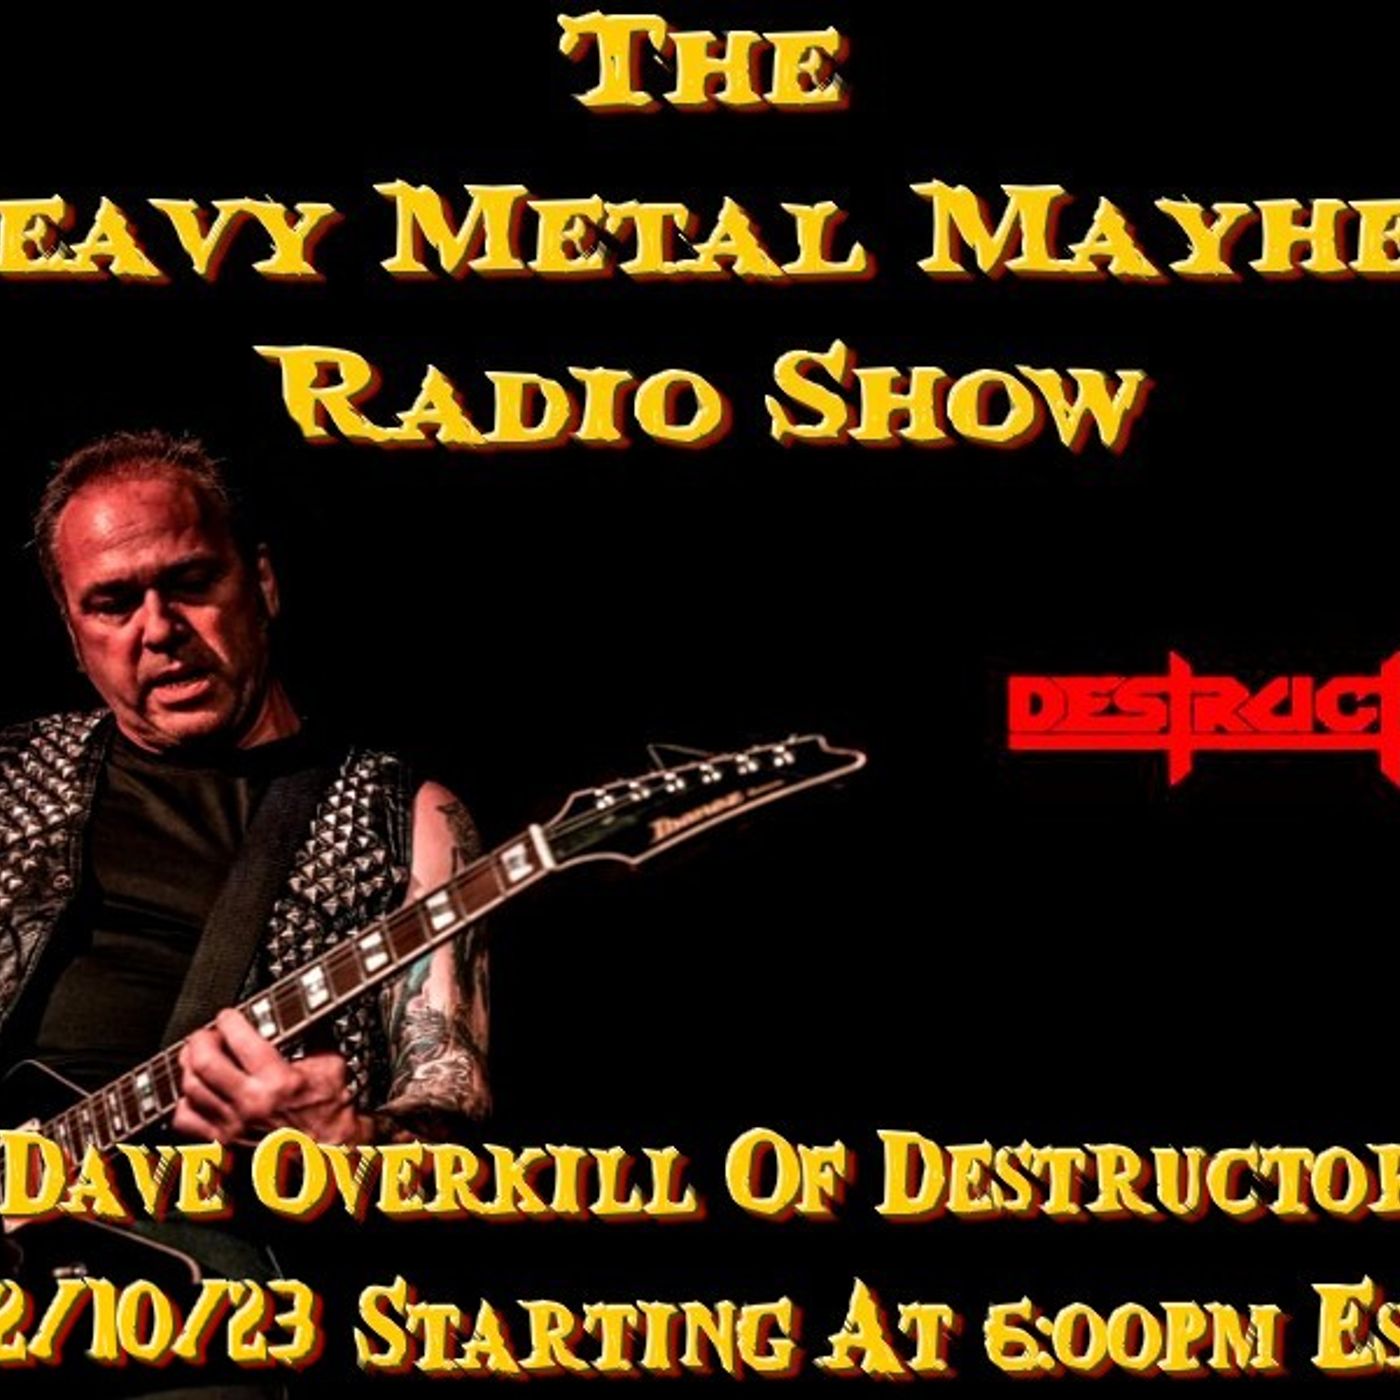 Guest Dave Overkill Of Destructor 12/10/23